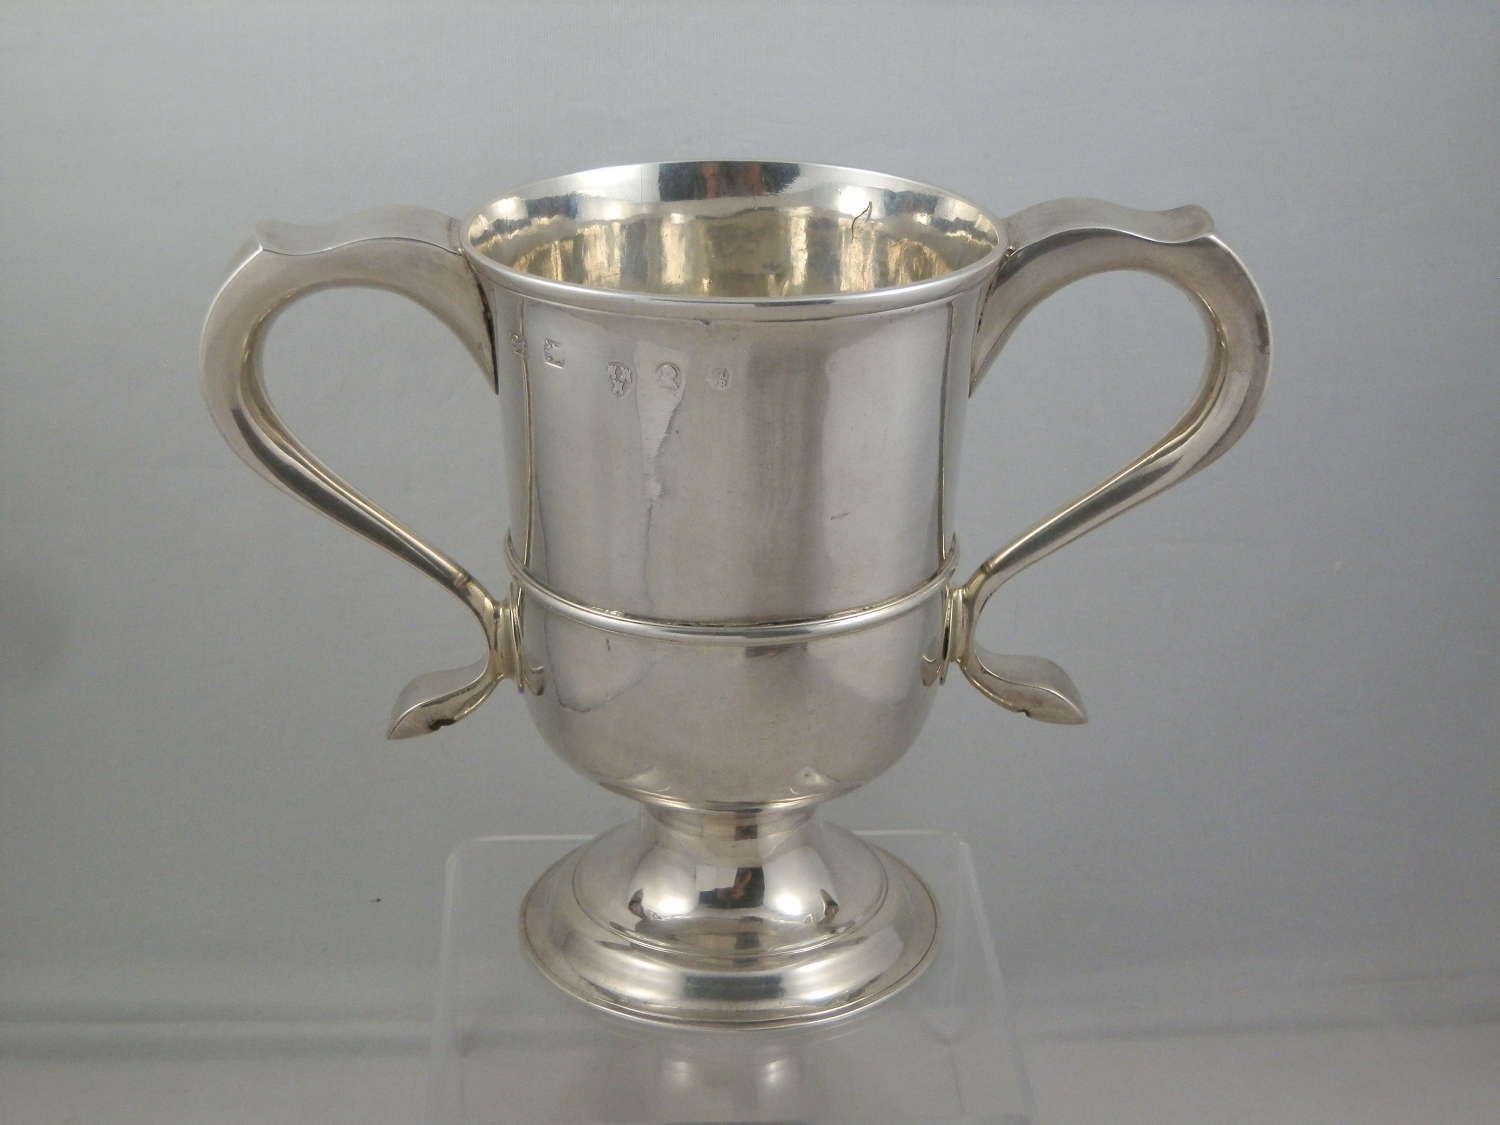 George III Newcastle silver loving cup, c.1780